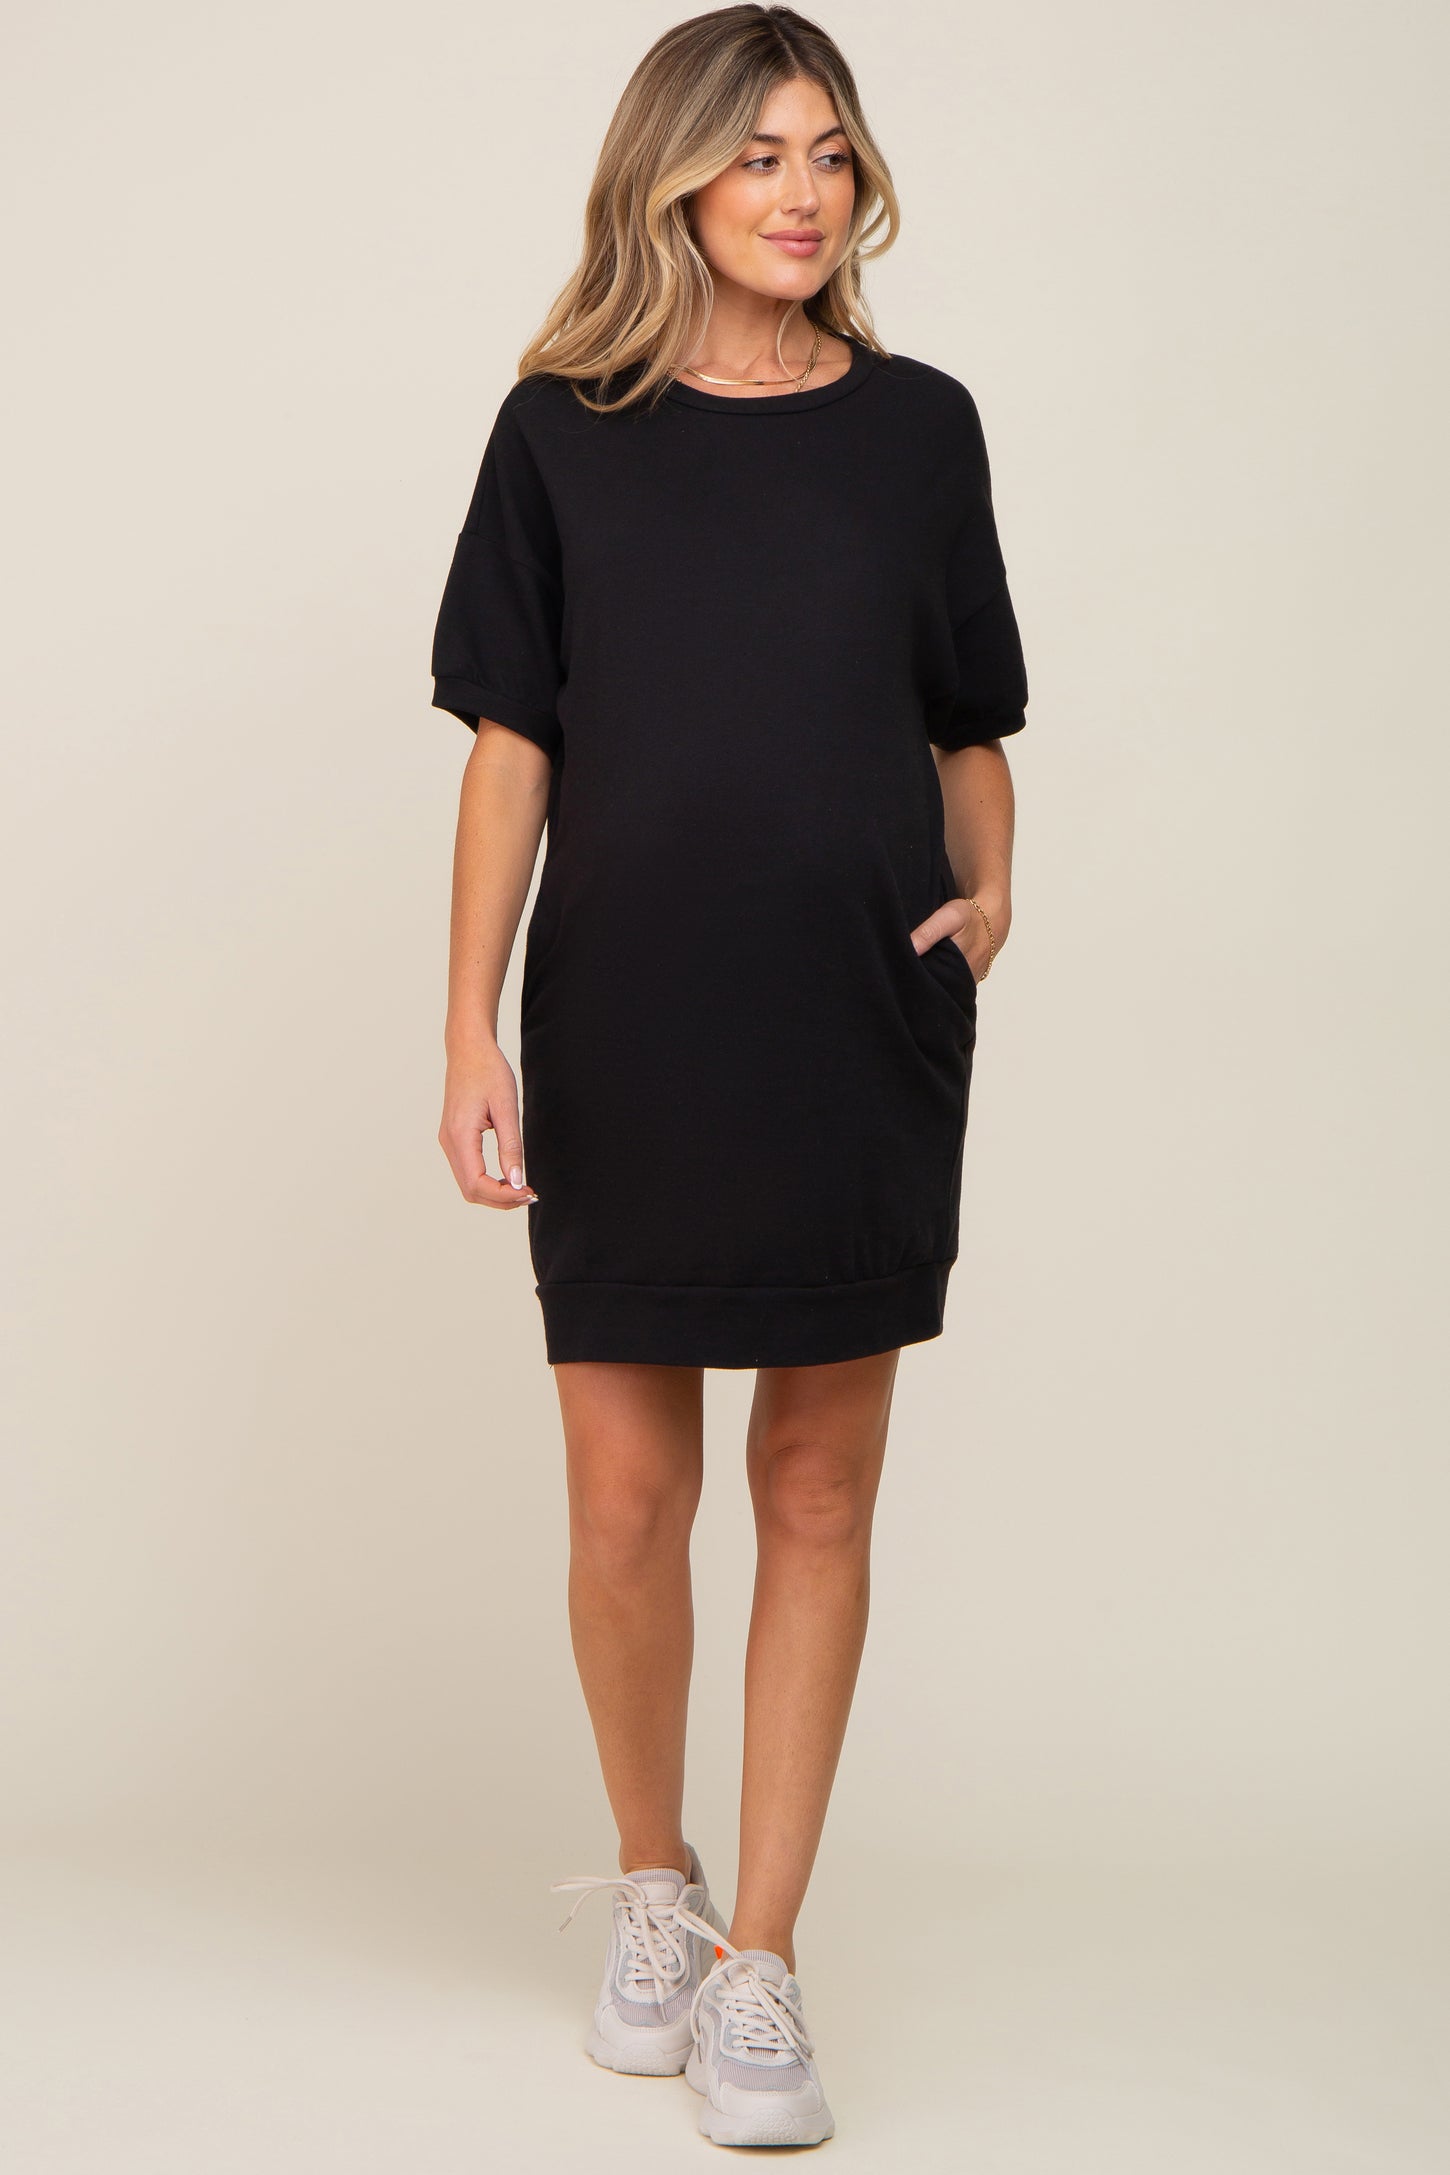 Black Short Sleeve Oversized Maternity T-Shirt Dress